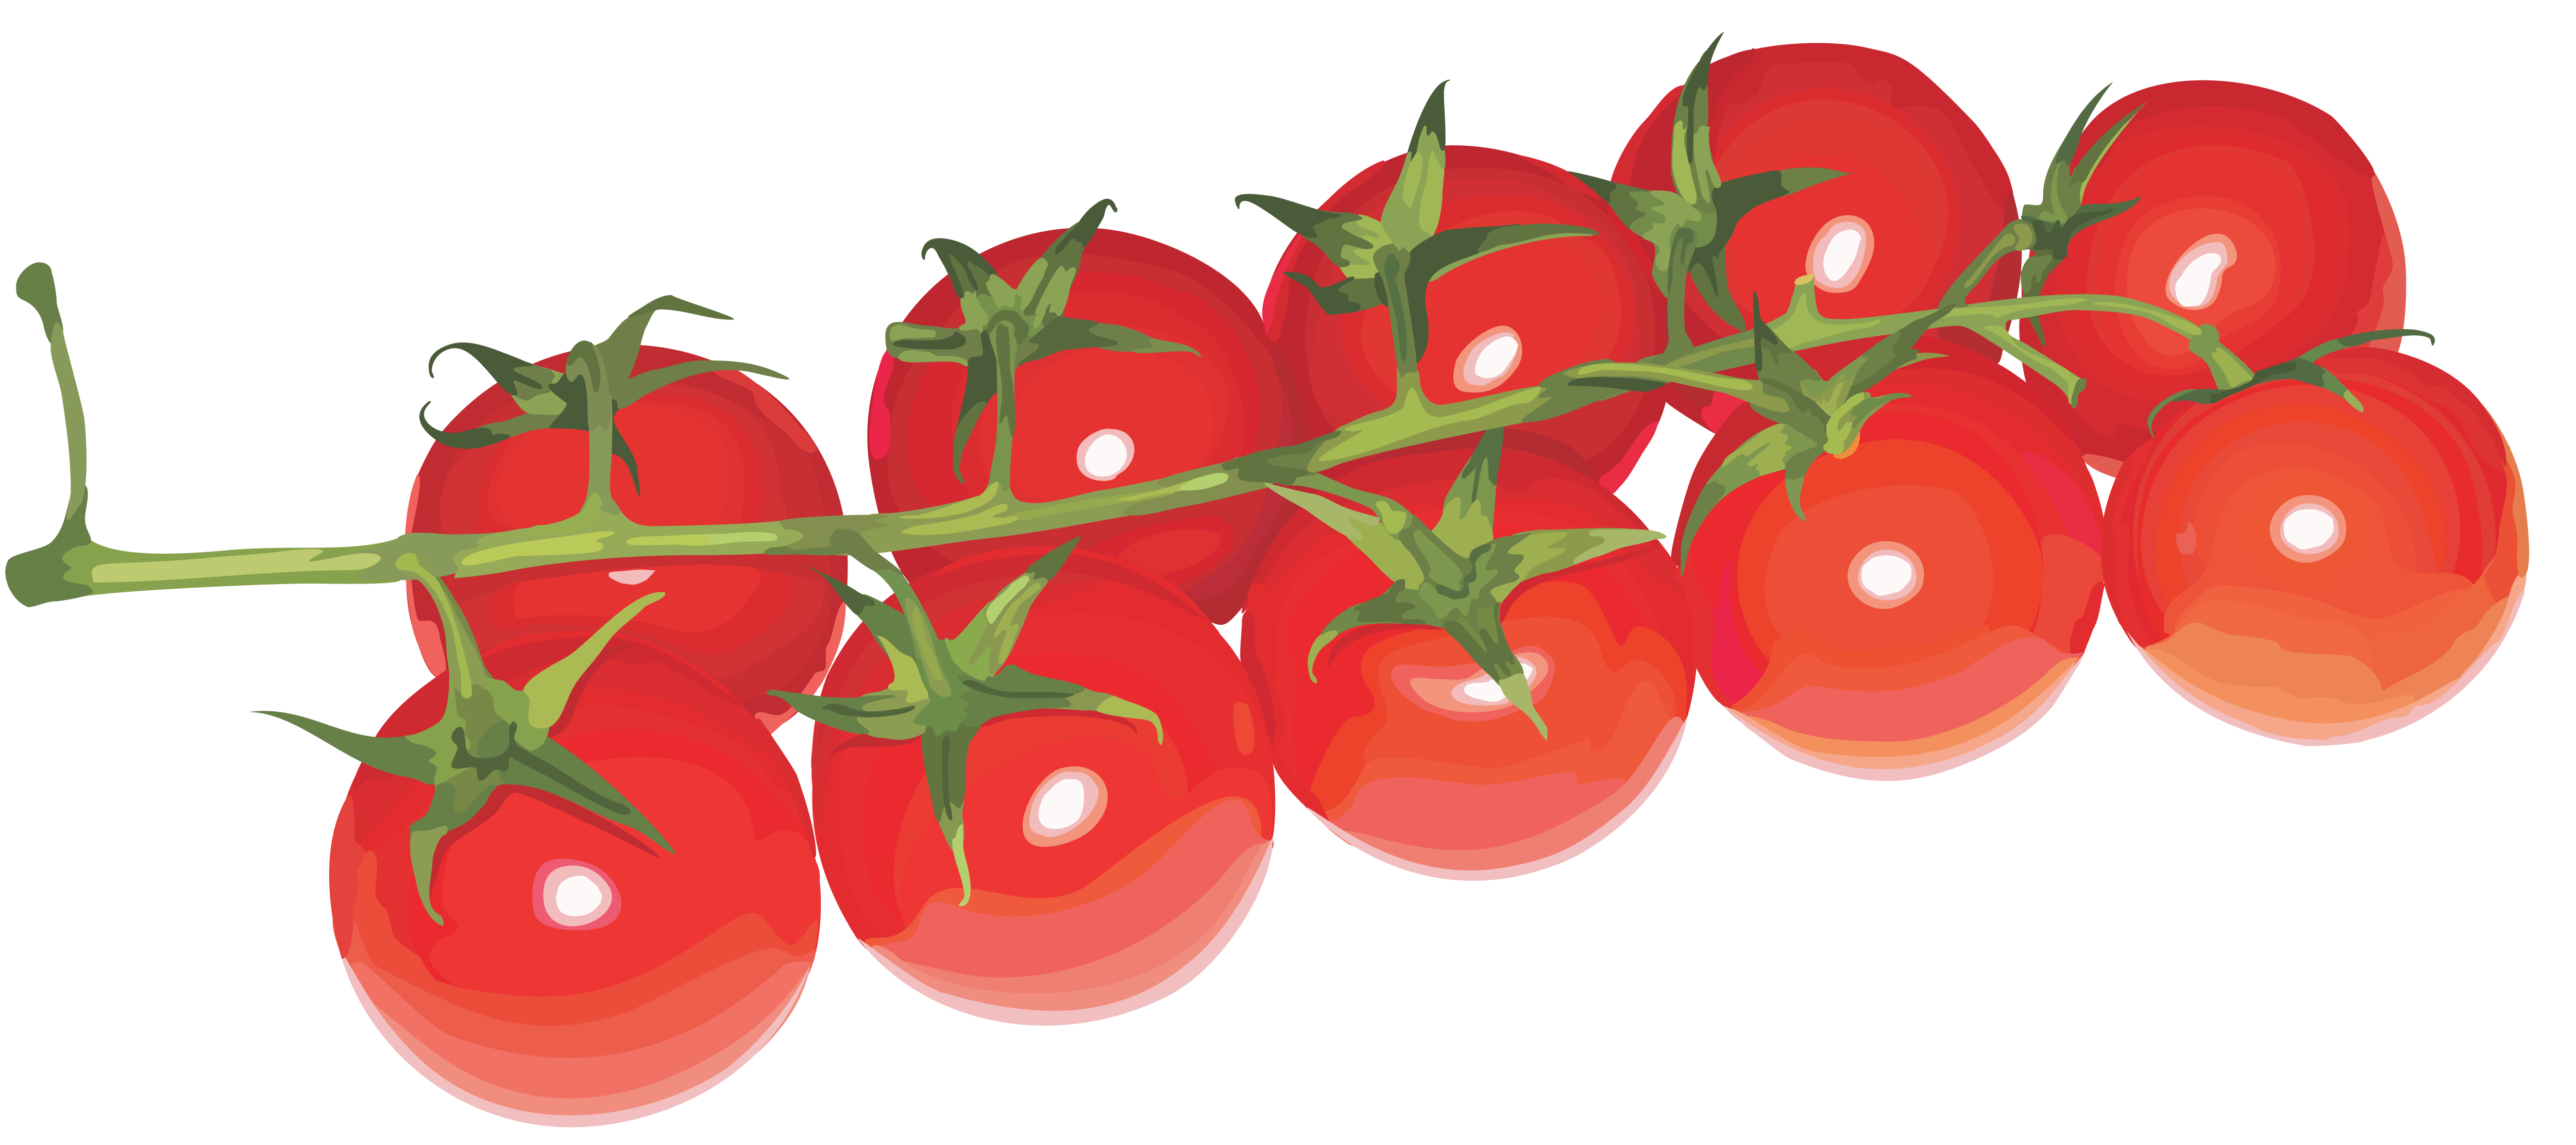 Tomatoes clipart vector. Tomato twenty three isolated